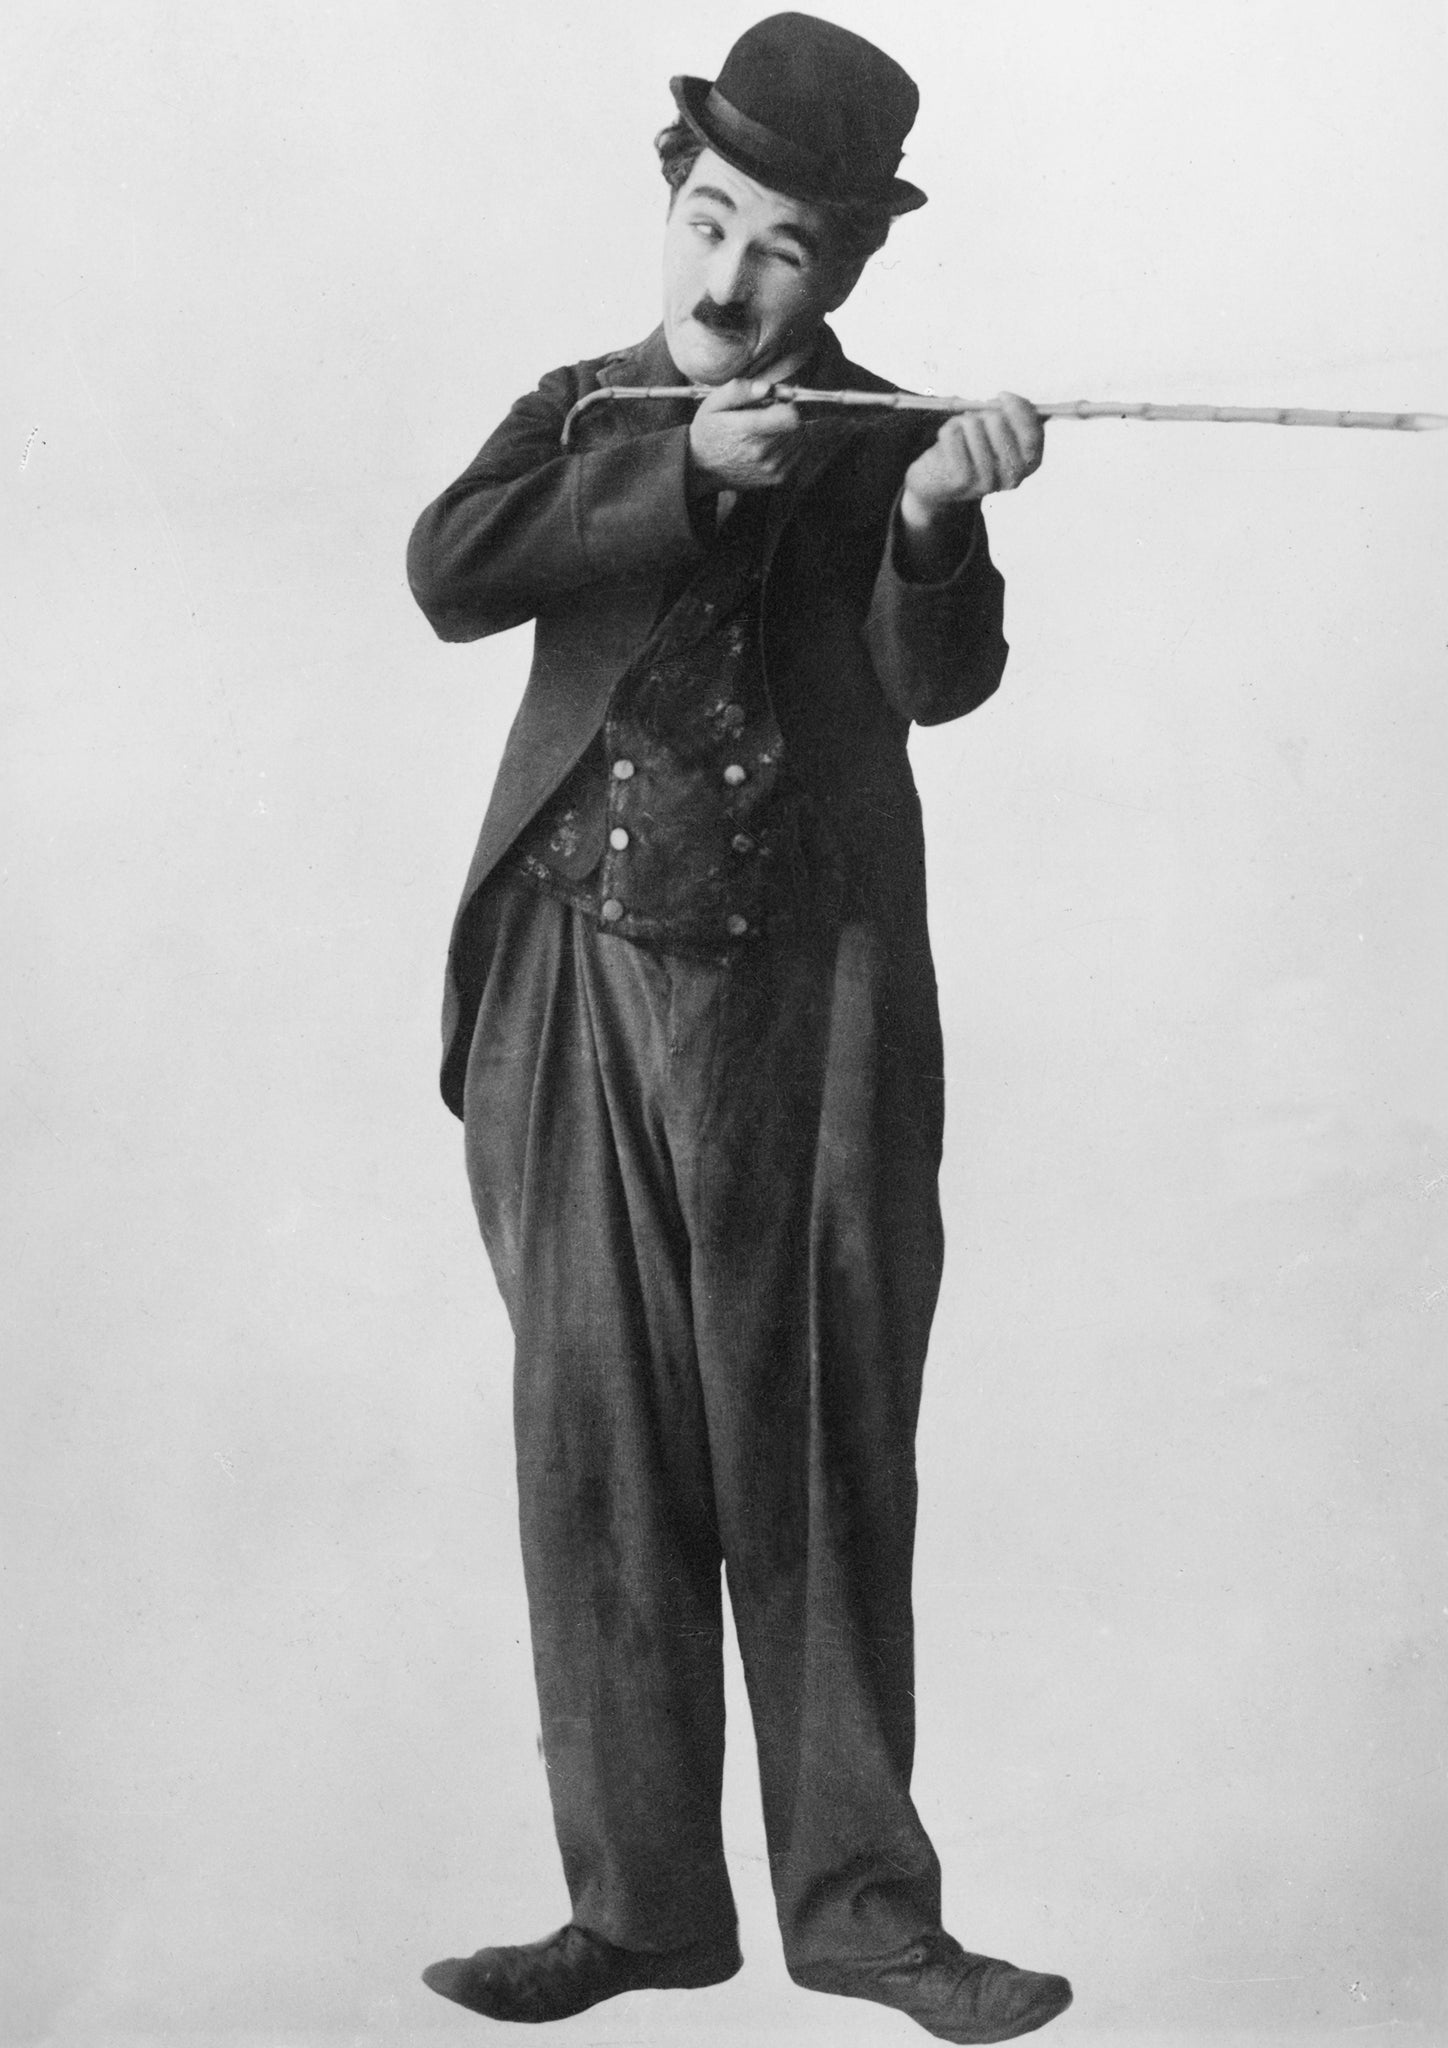 Charlie Chaplin wore a moustache as a matter of course